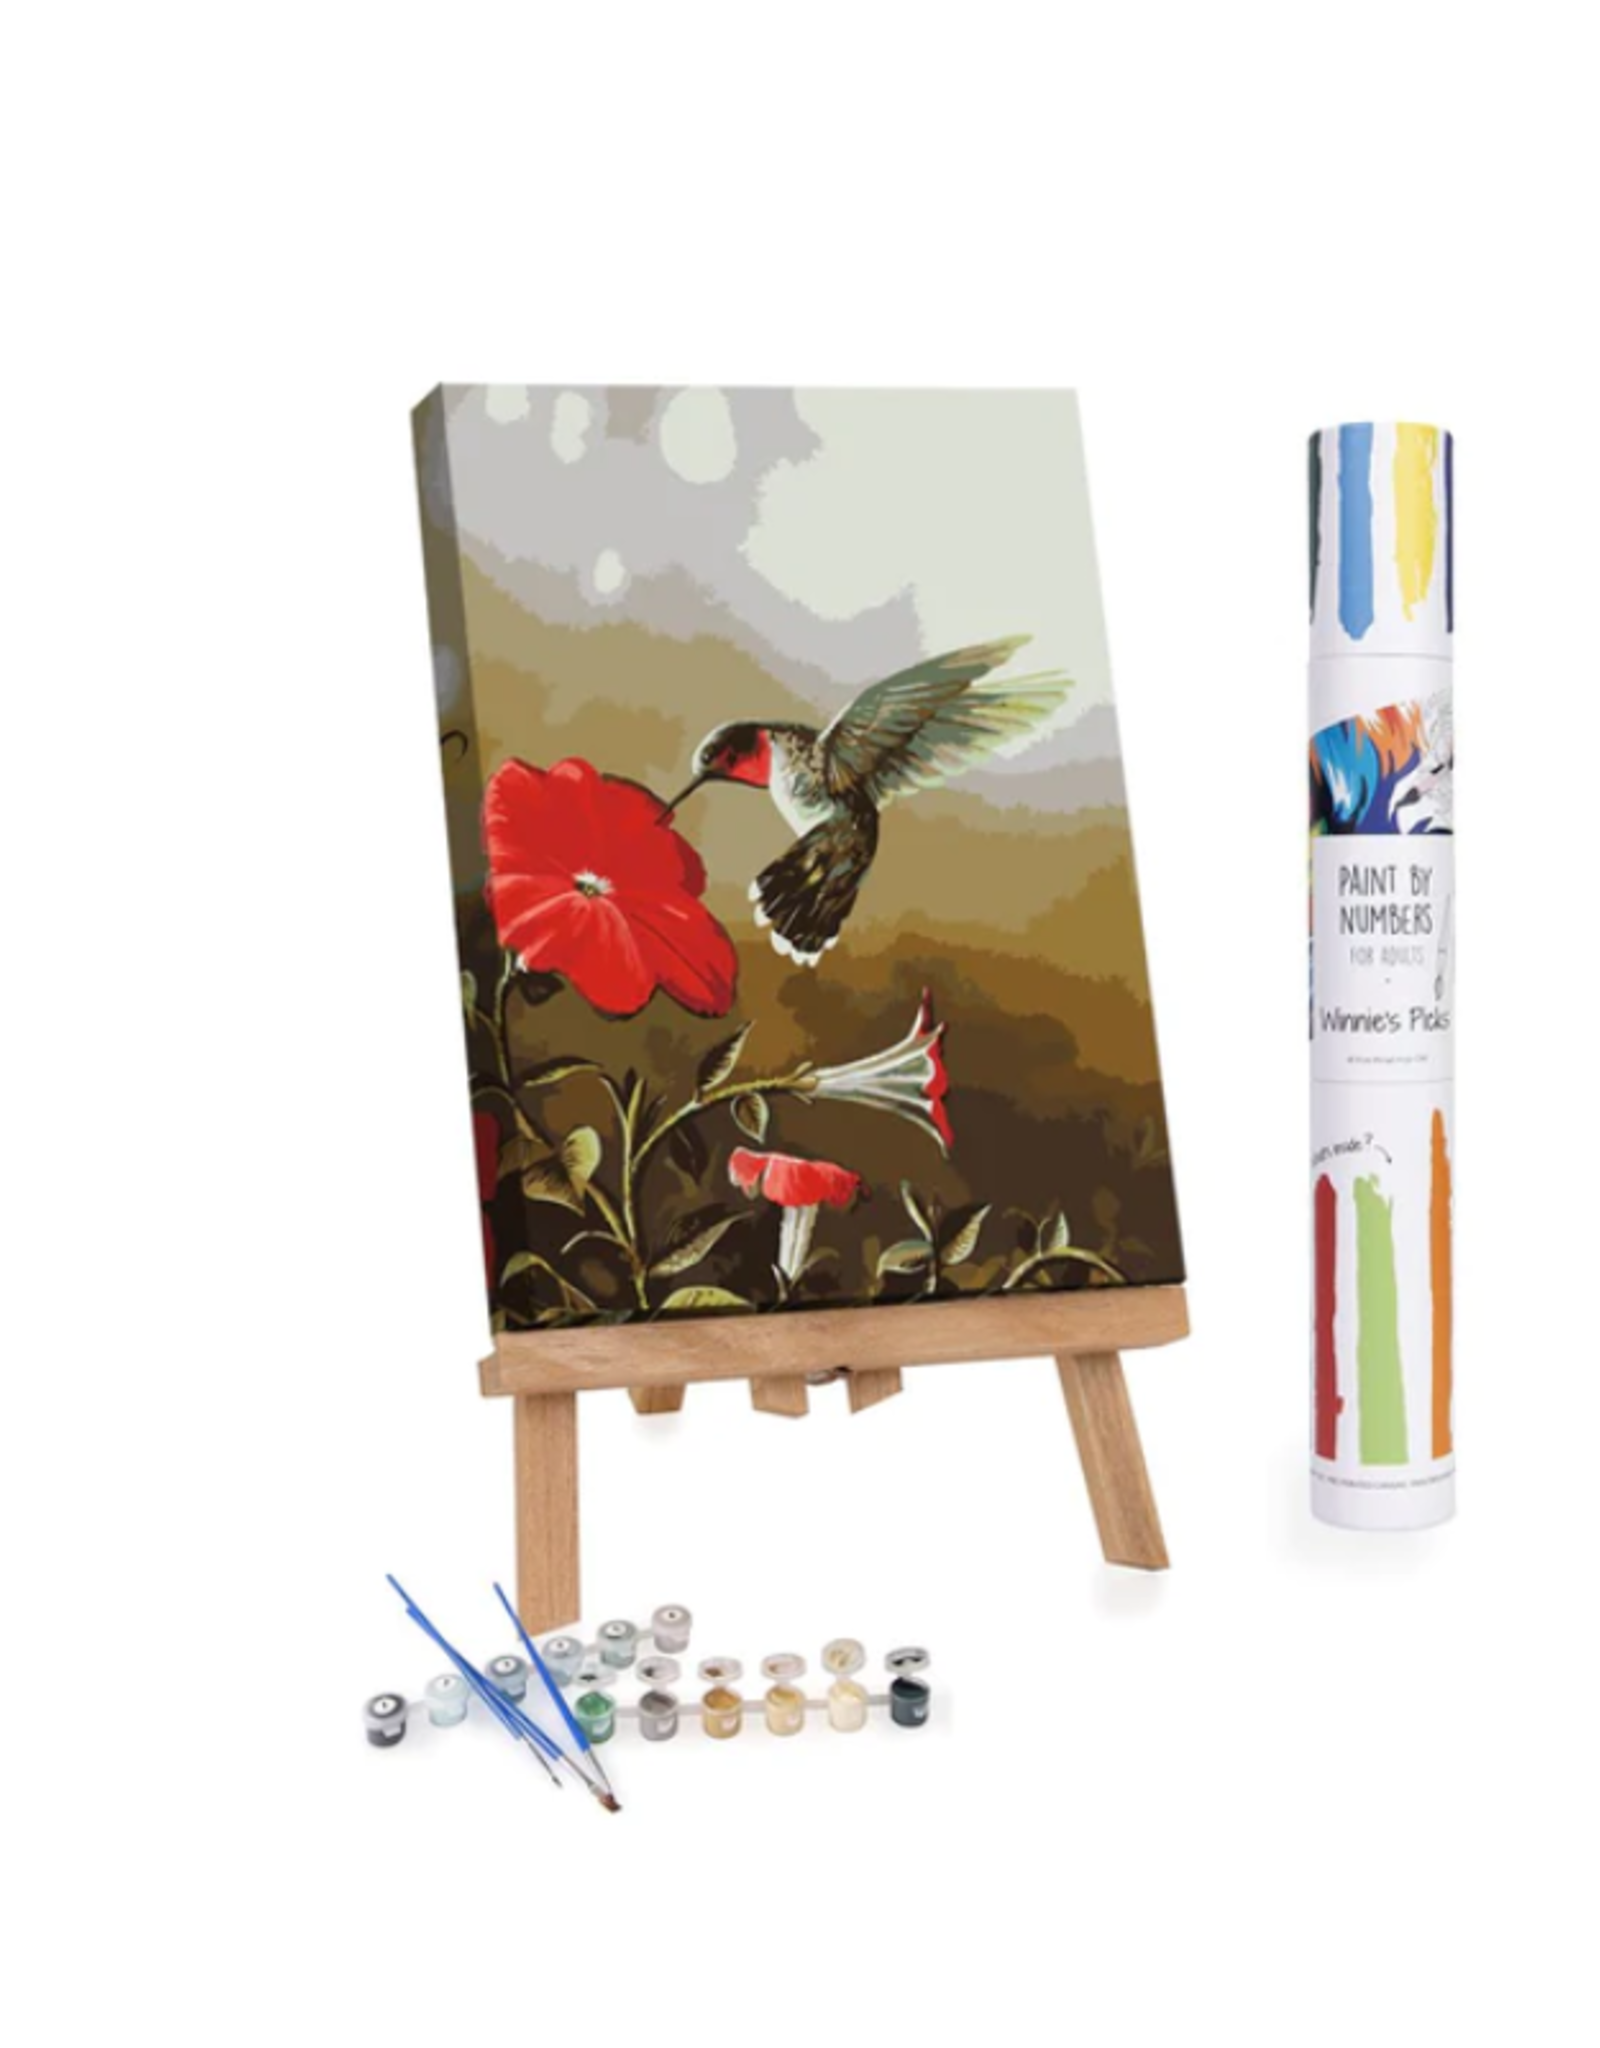 Winnie's Picks Paint by Numbers: Ruby Throated Hummingbird - 20x15